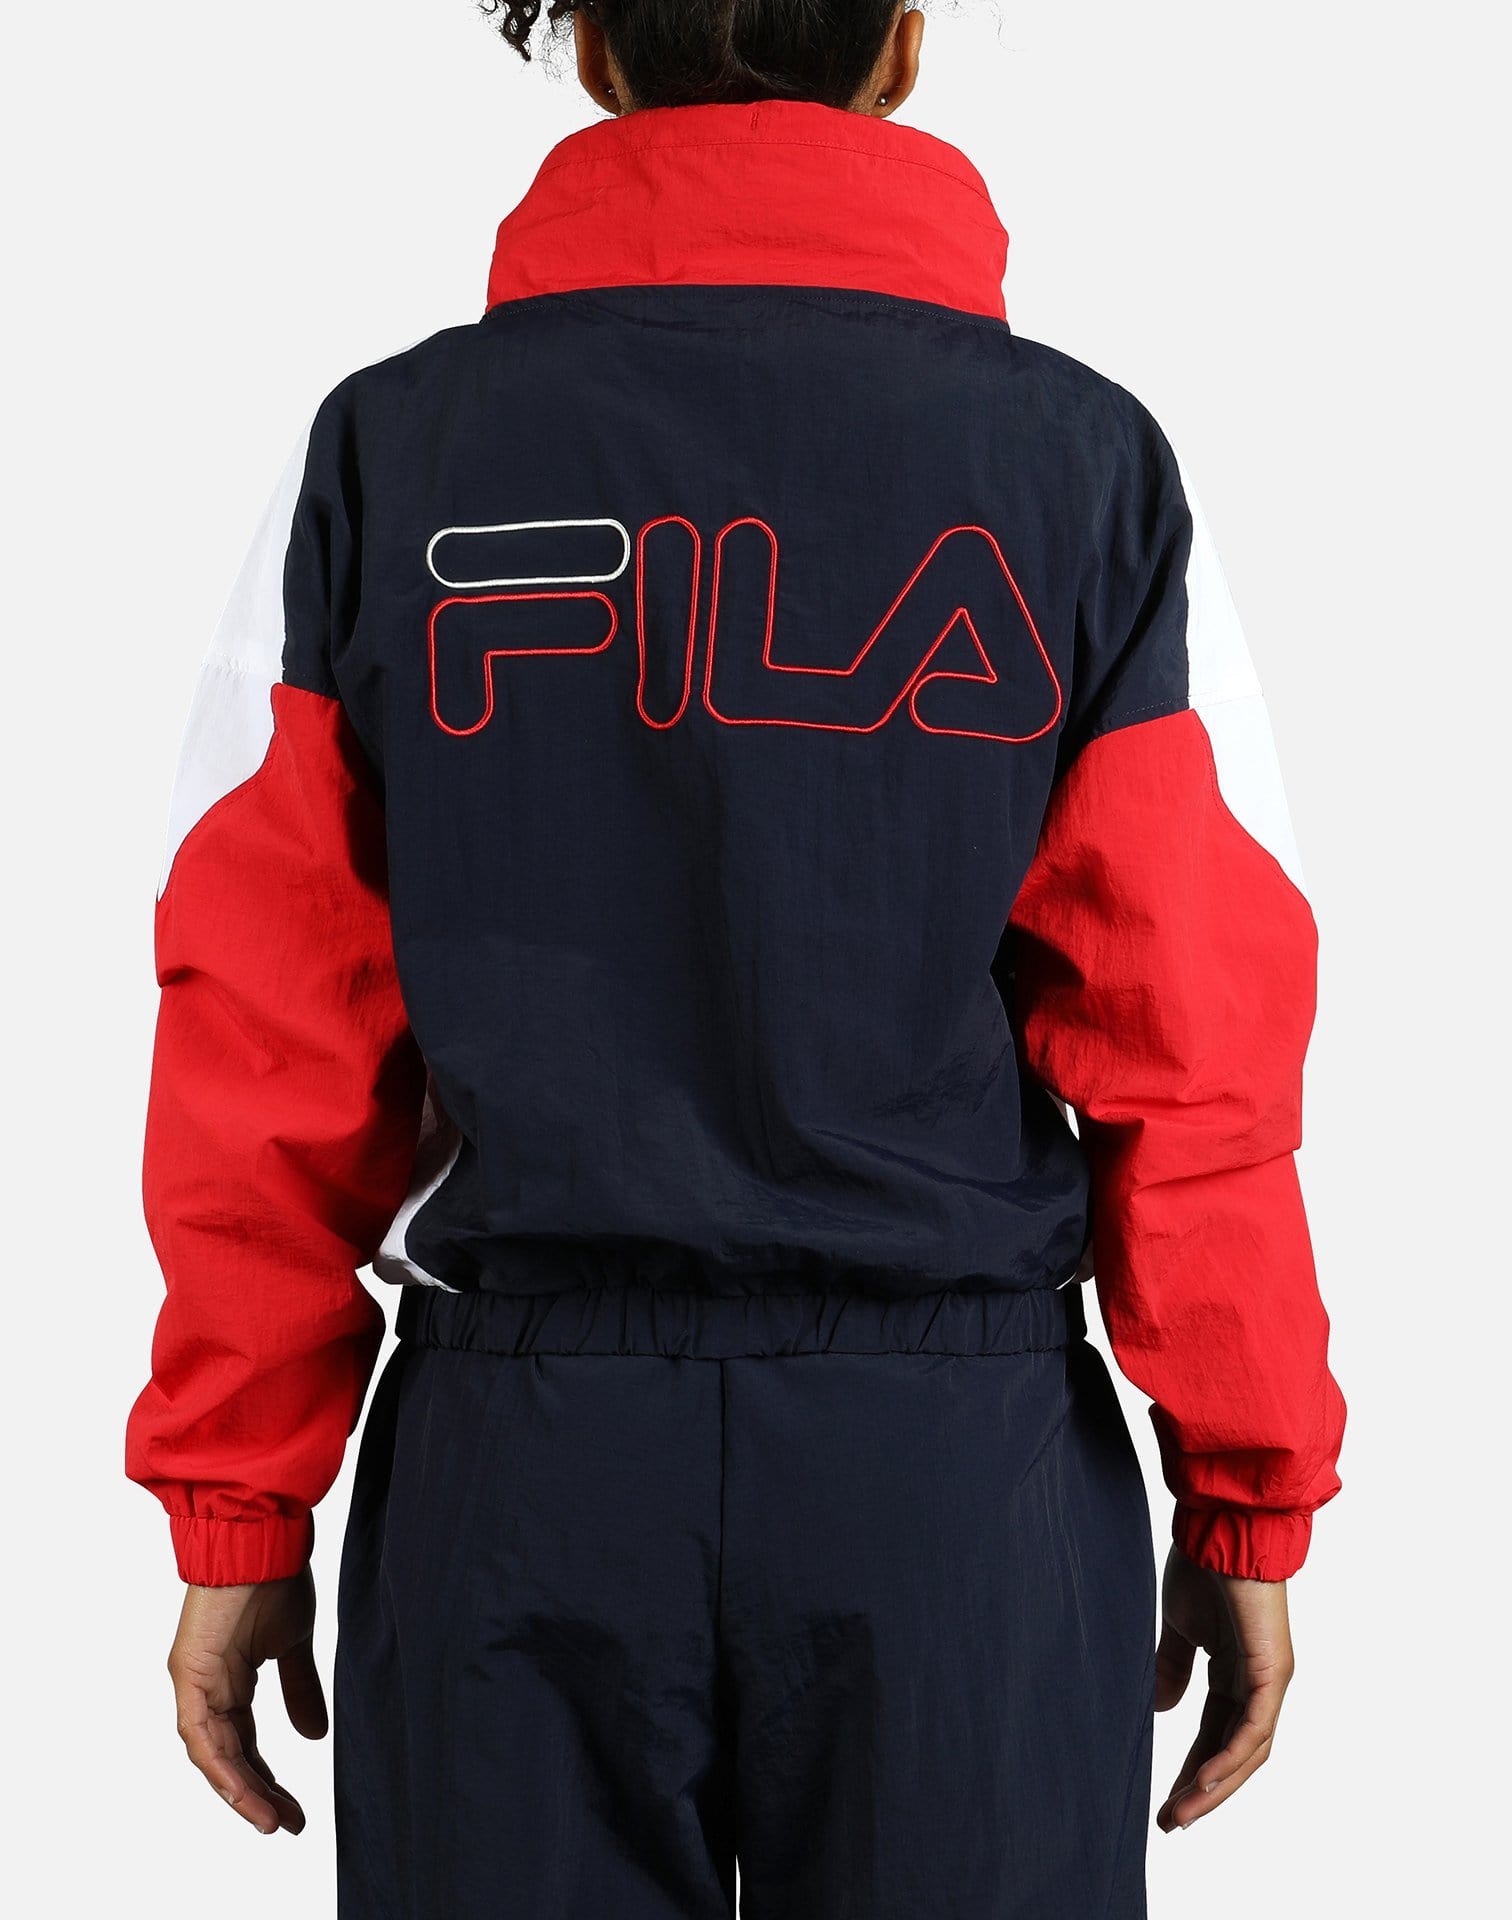 FILA Women's Tessa Pullover Jacket